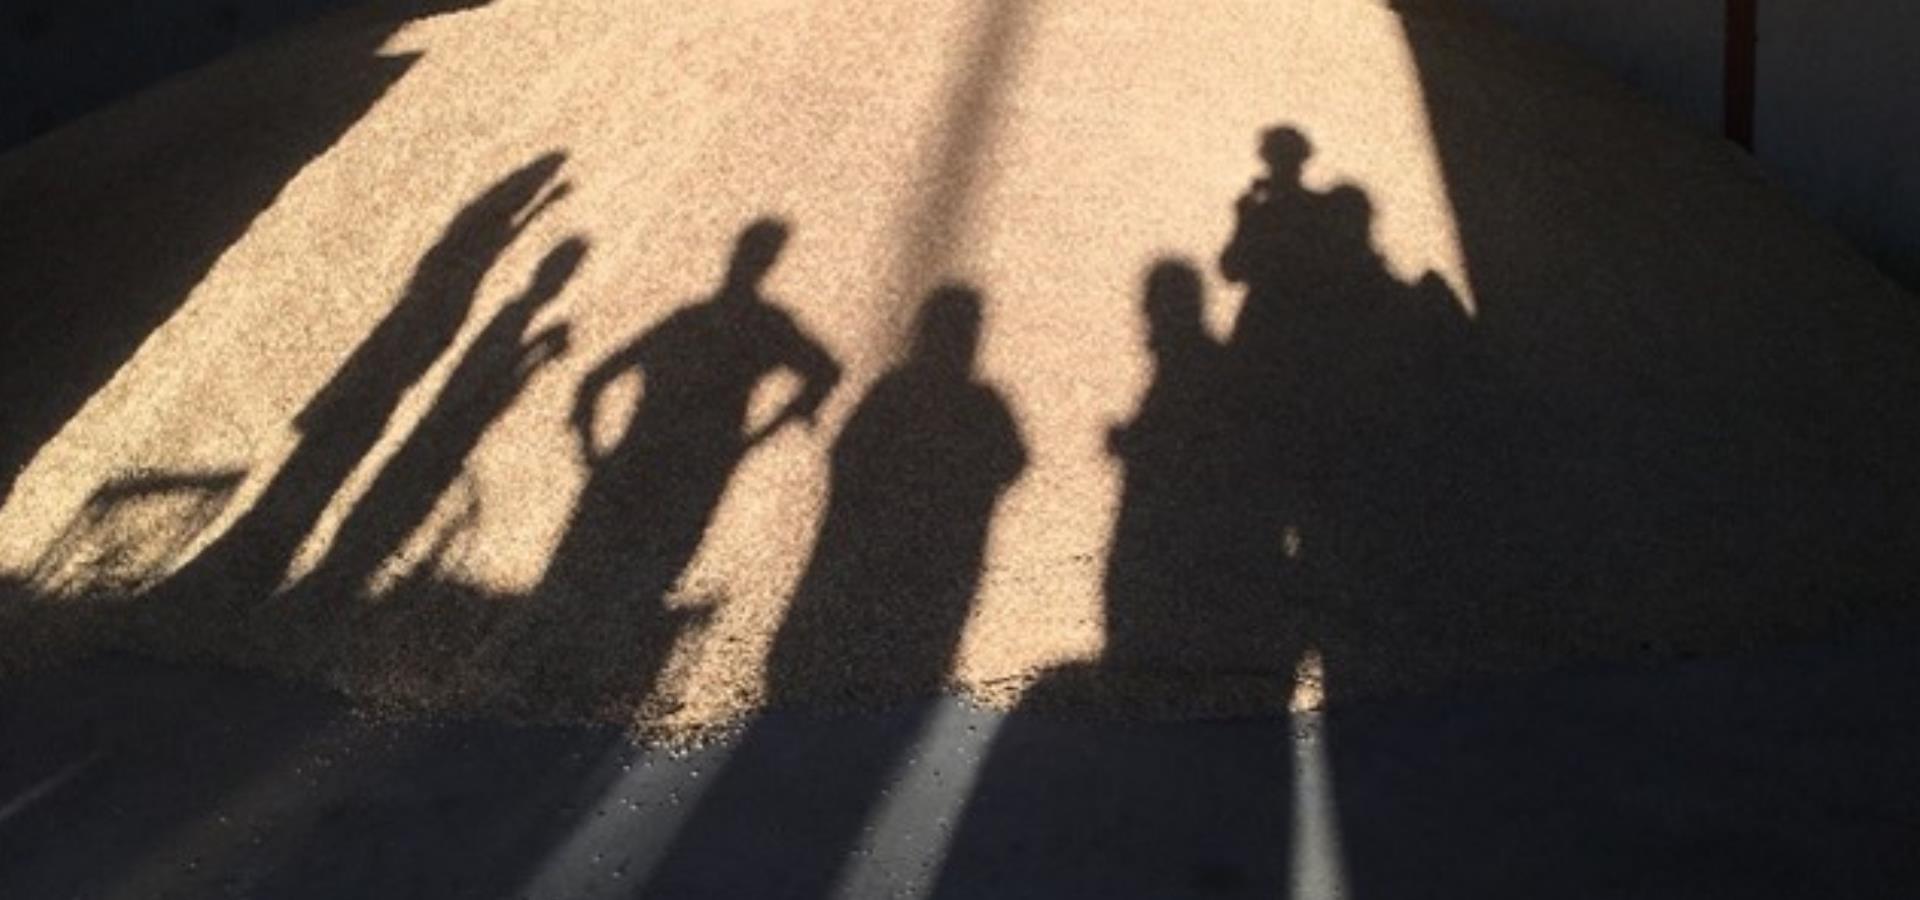 shadows of Art of Farming participants